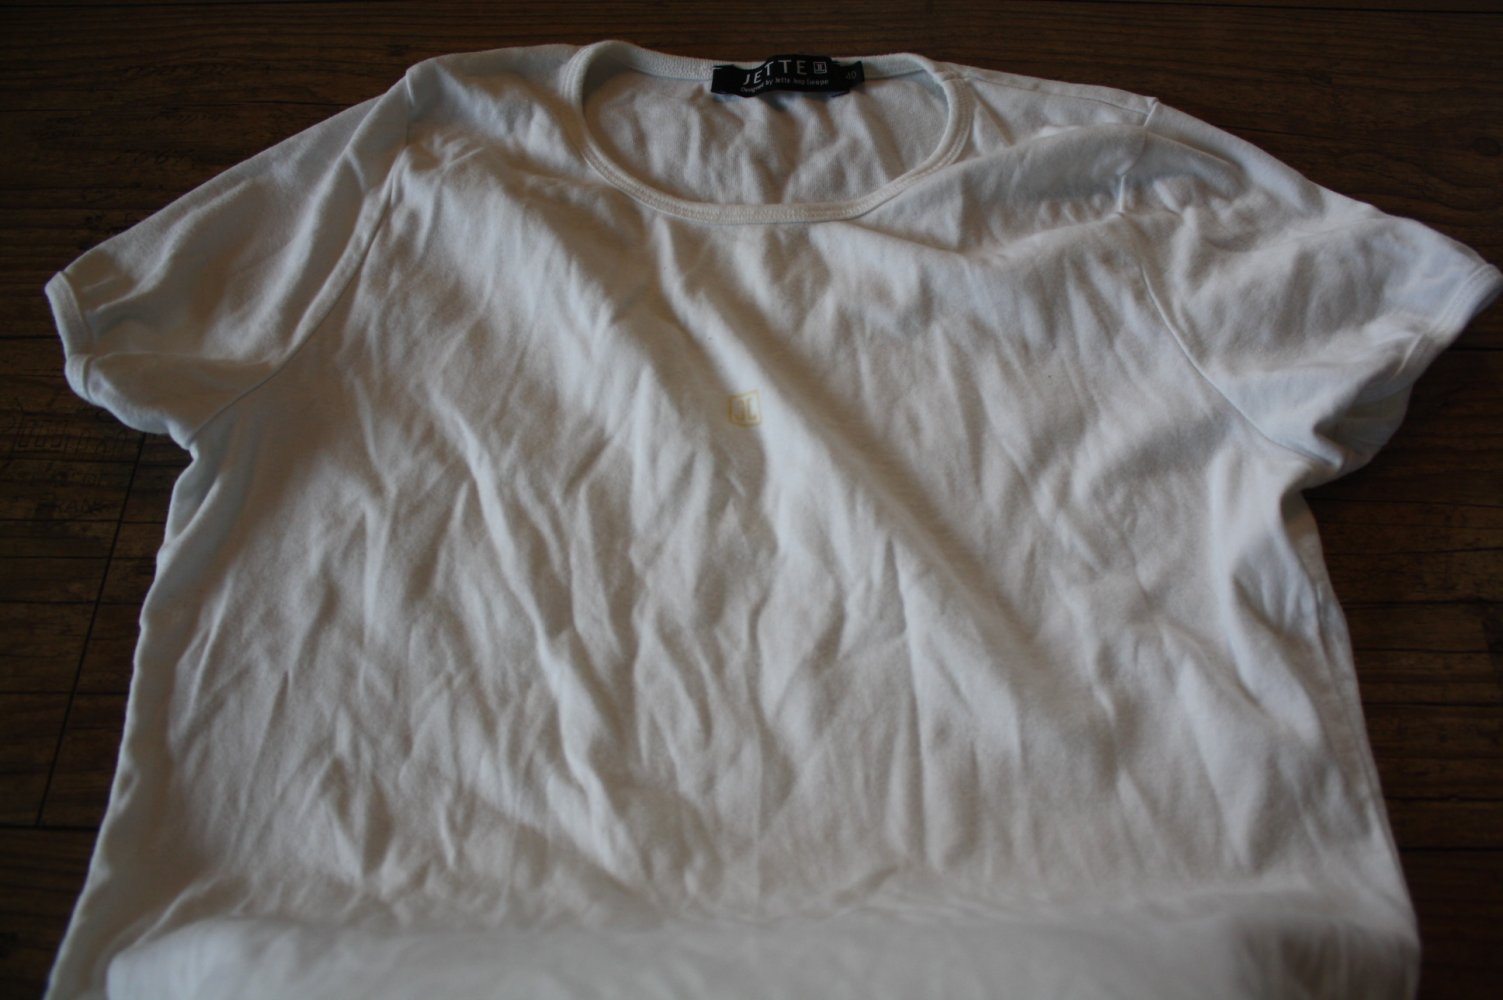 Jette Joop Shirt Baumwollshirt TShirt weiss S 36 Basic Basicshirt 